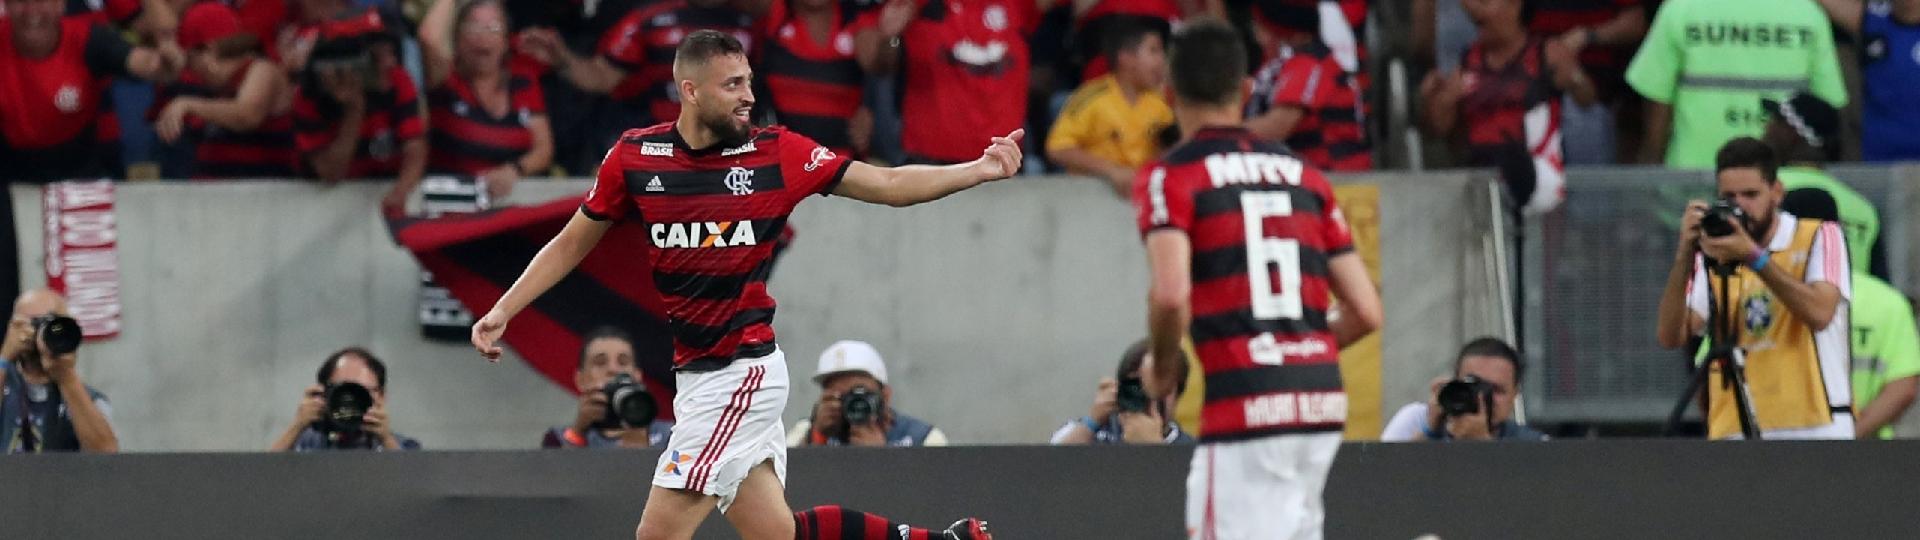 Léo Duarte comemora após marcar o segundo gol do Flamengo sobre o Fluminense